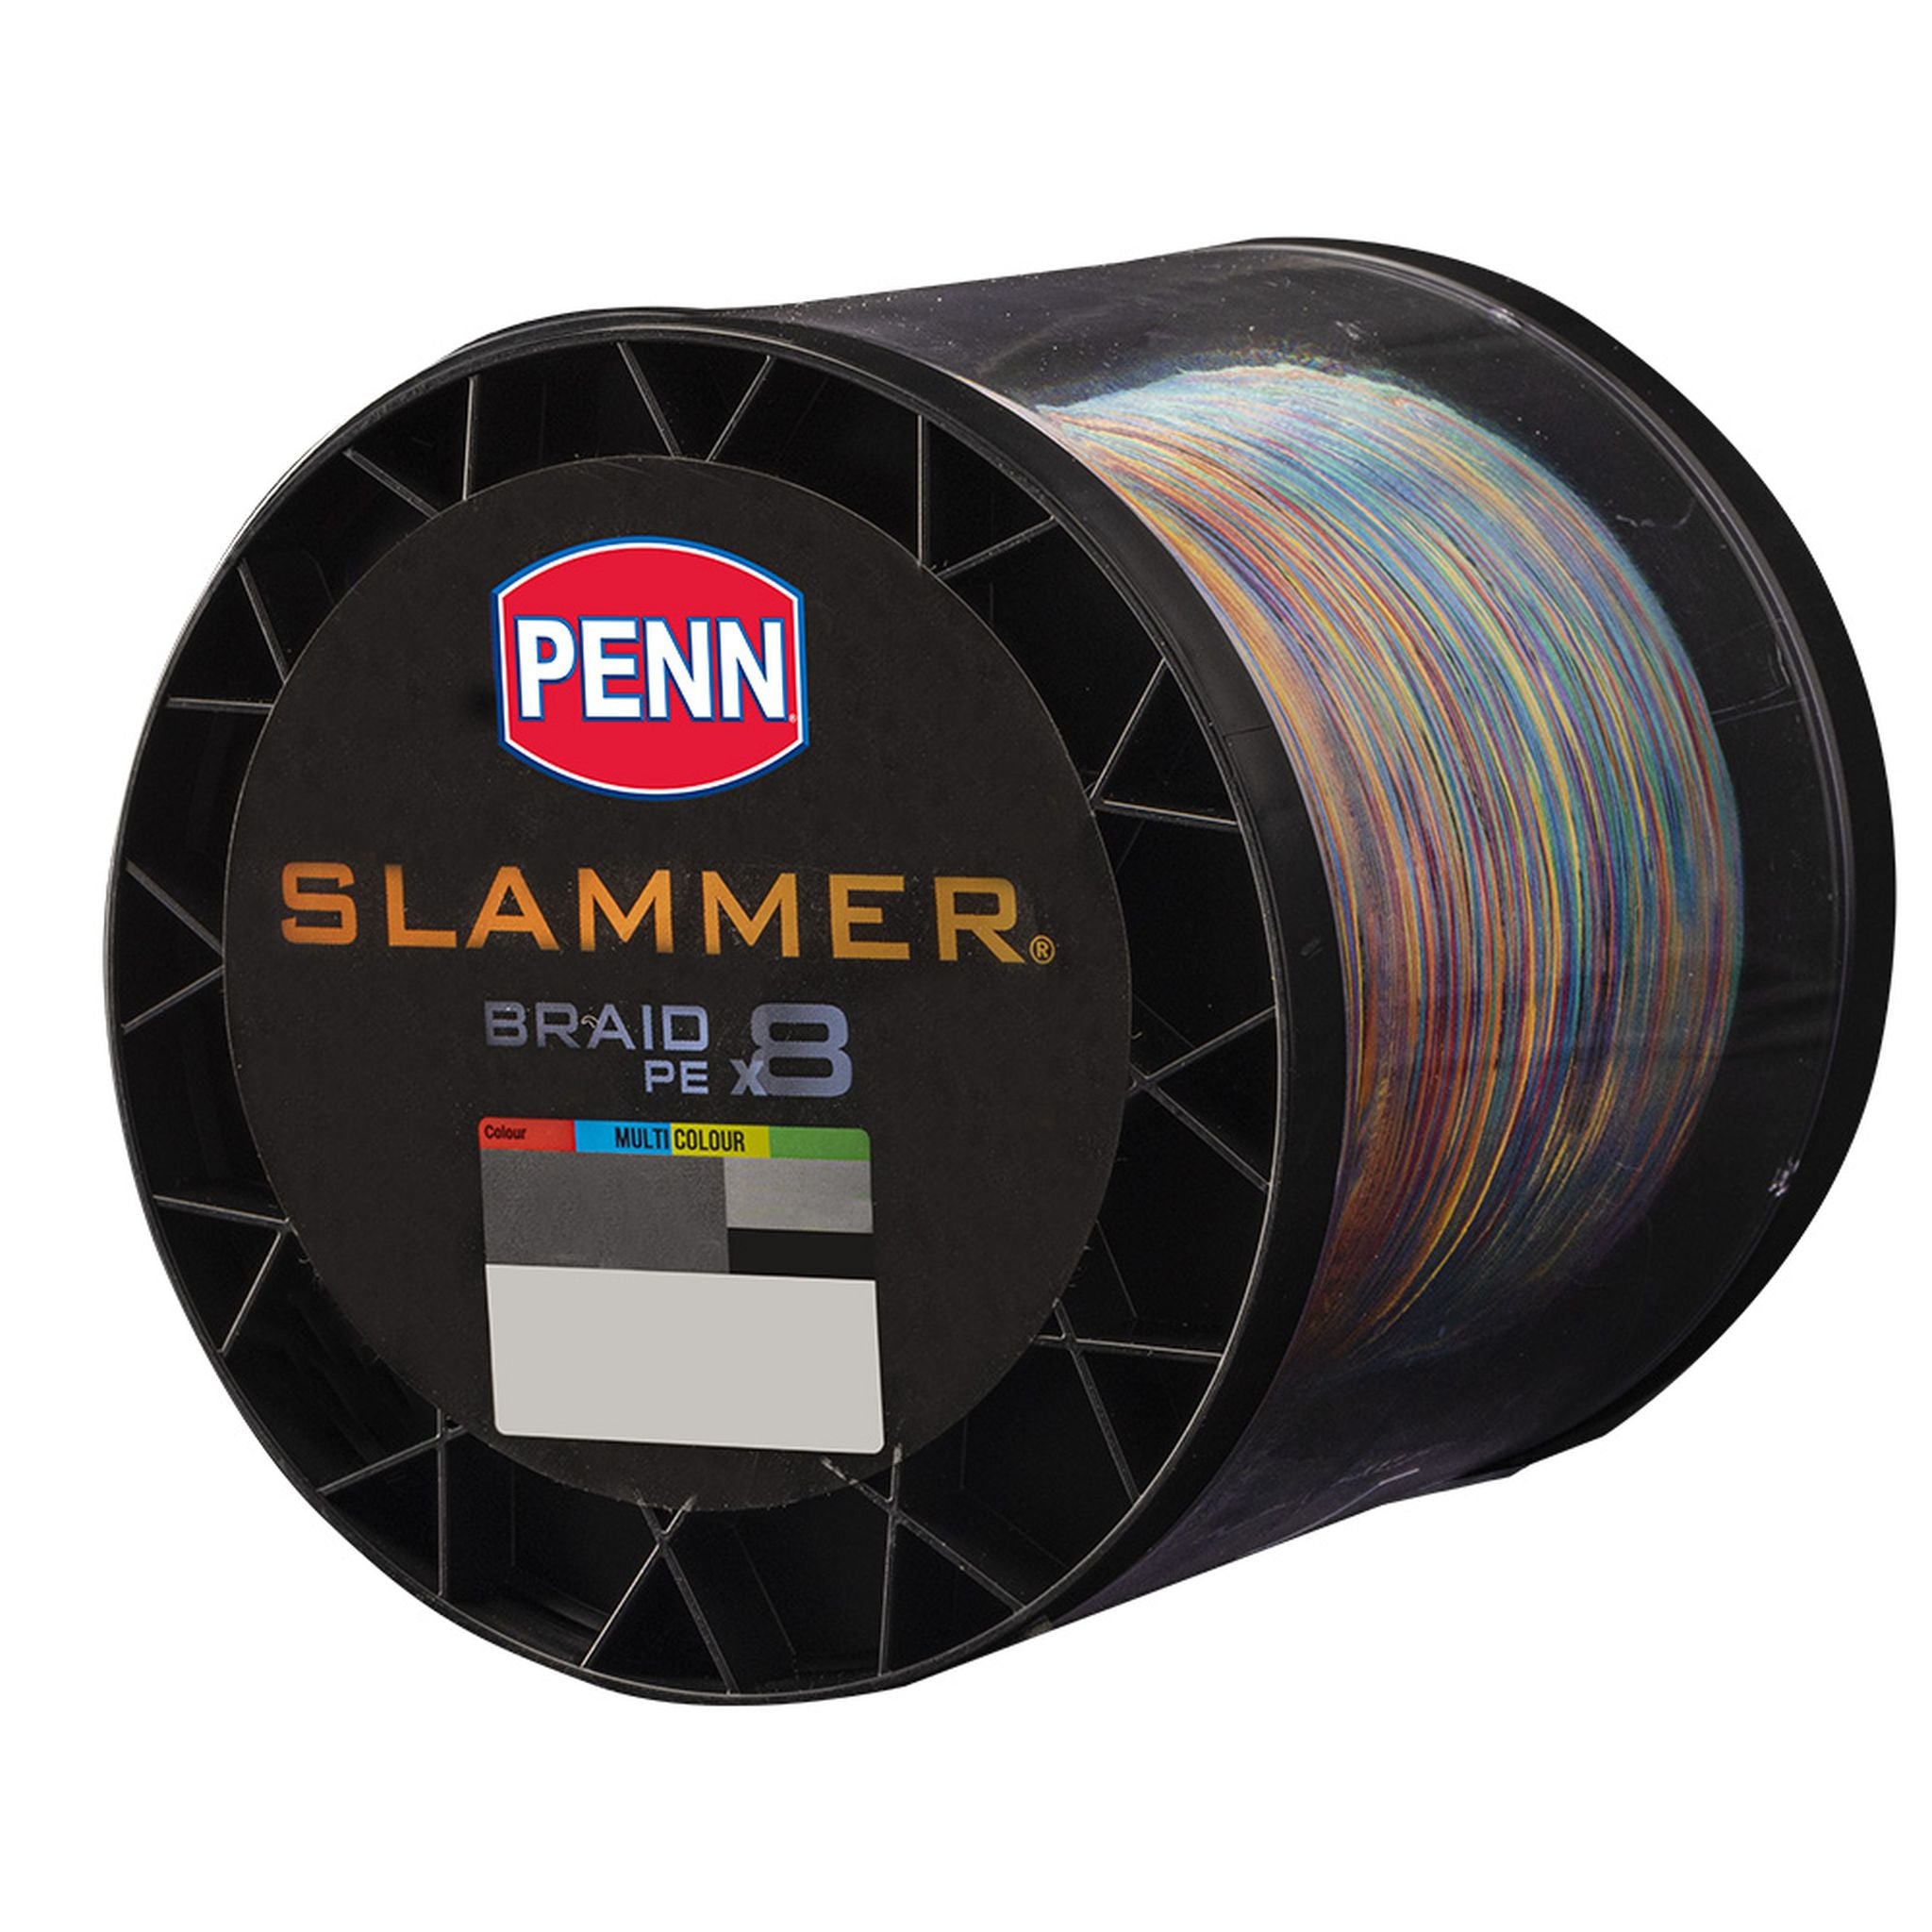 Penn Slammer X8 Braid Fishing Line 400m Multi